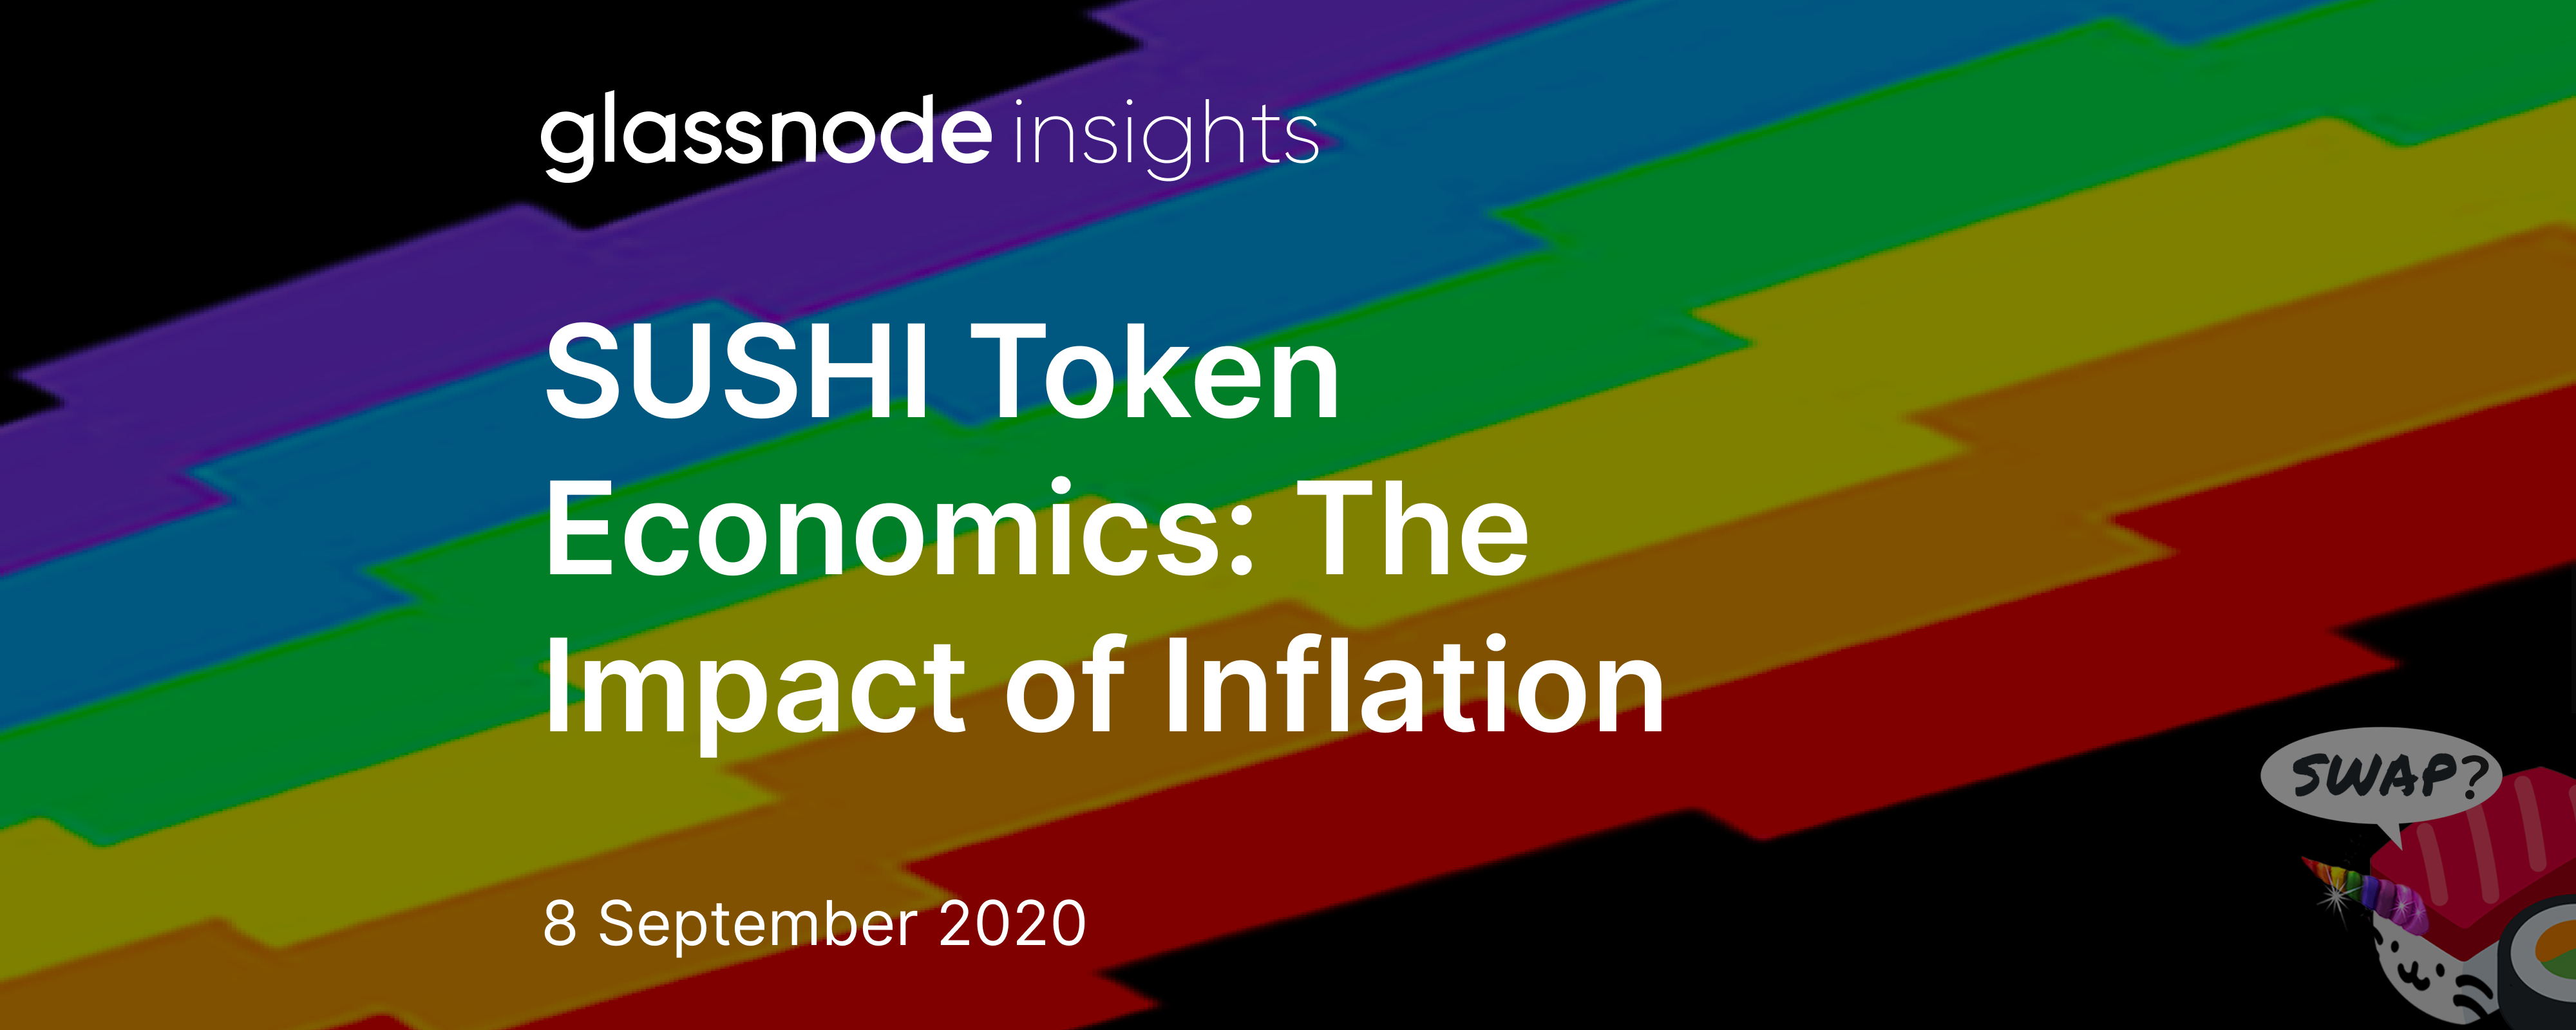 SUSHI Token Economics: The Impact of Inflation